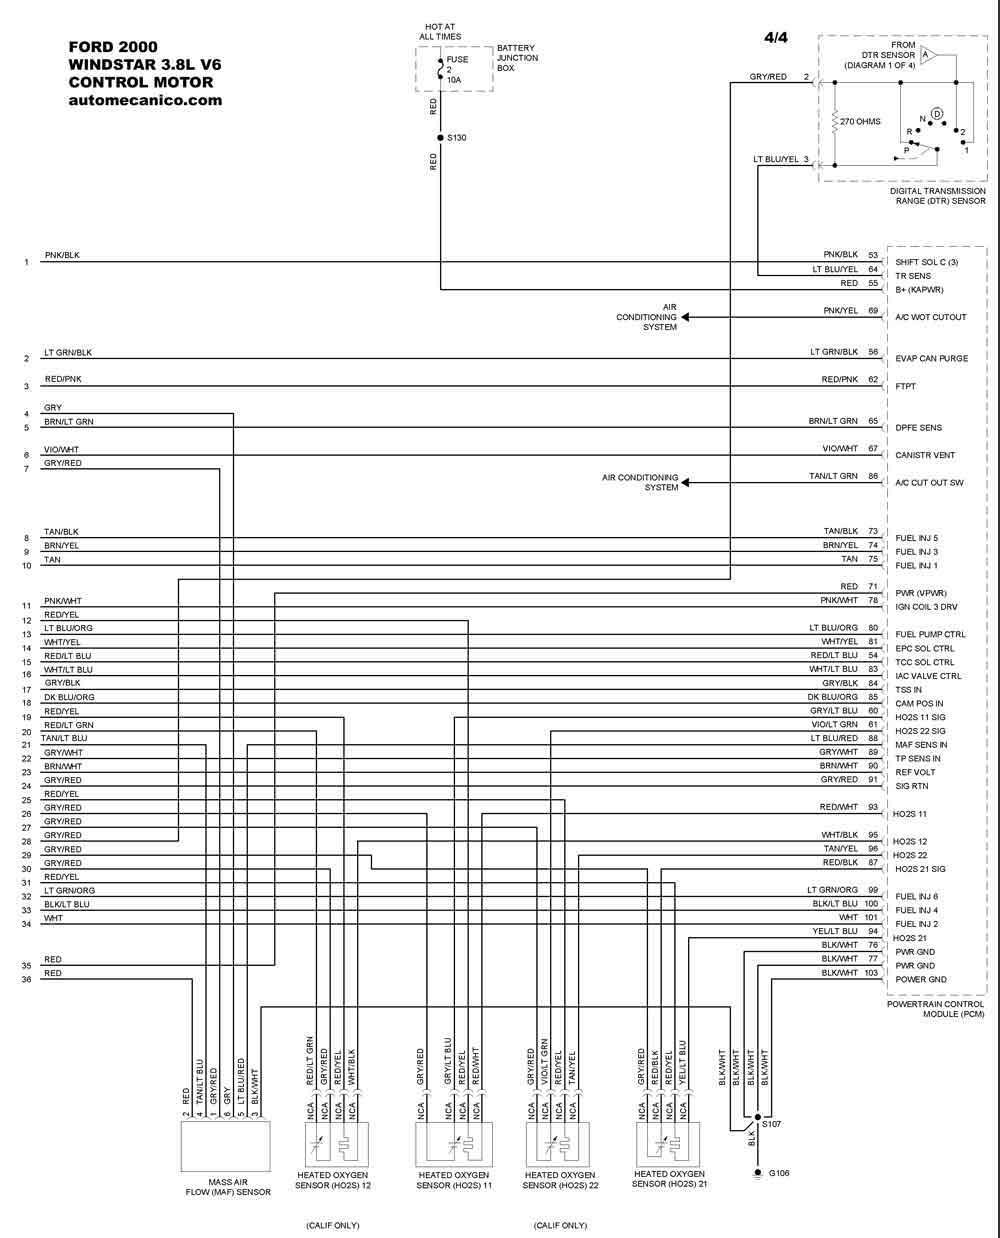 FORD 2000 - Diagramas control del motor - Graphics - Esquemas